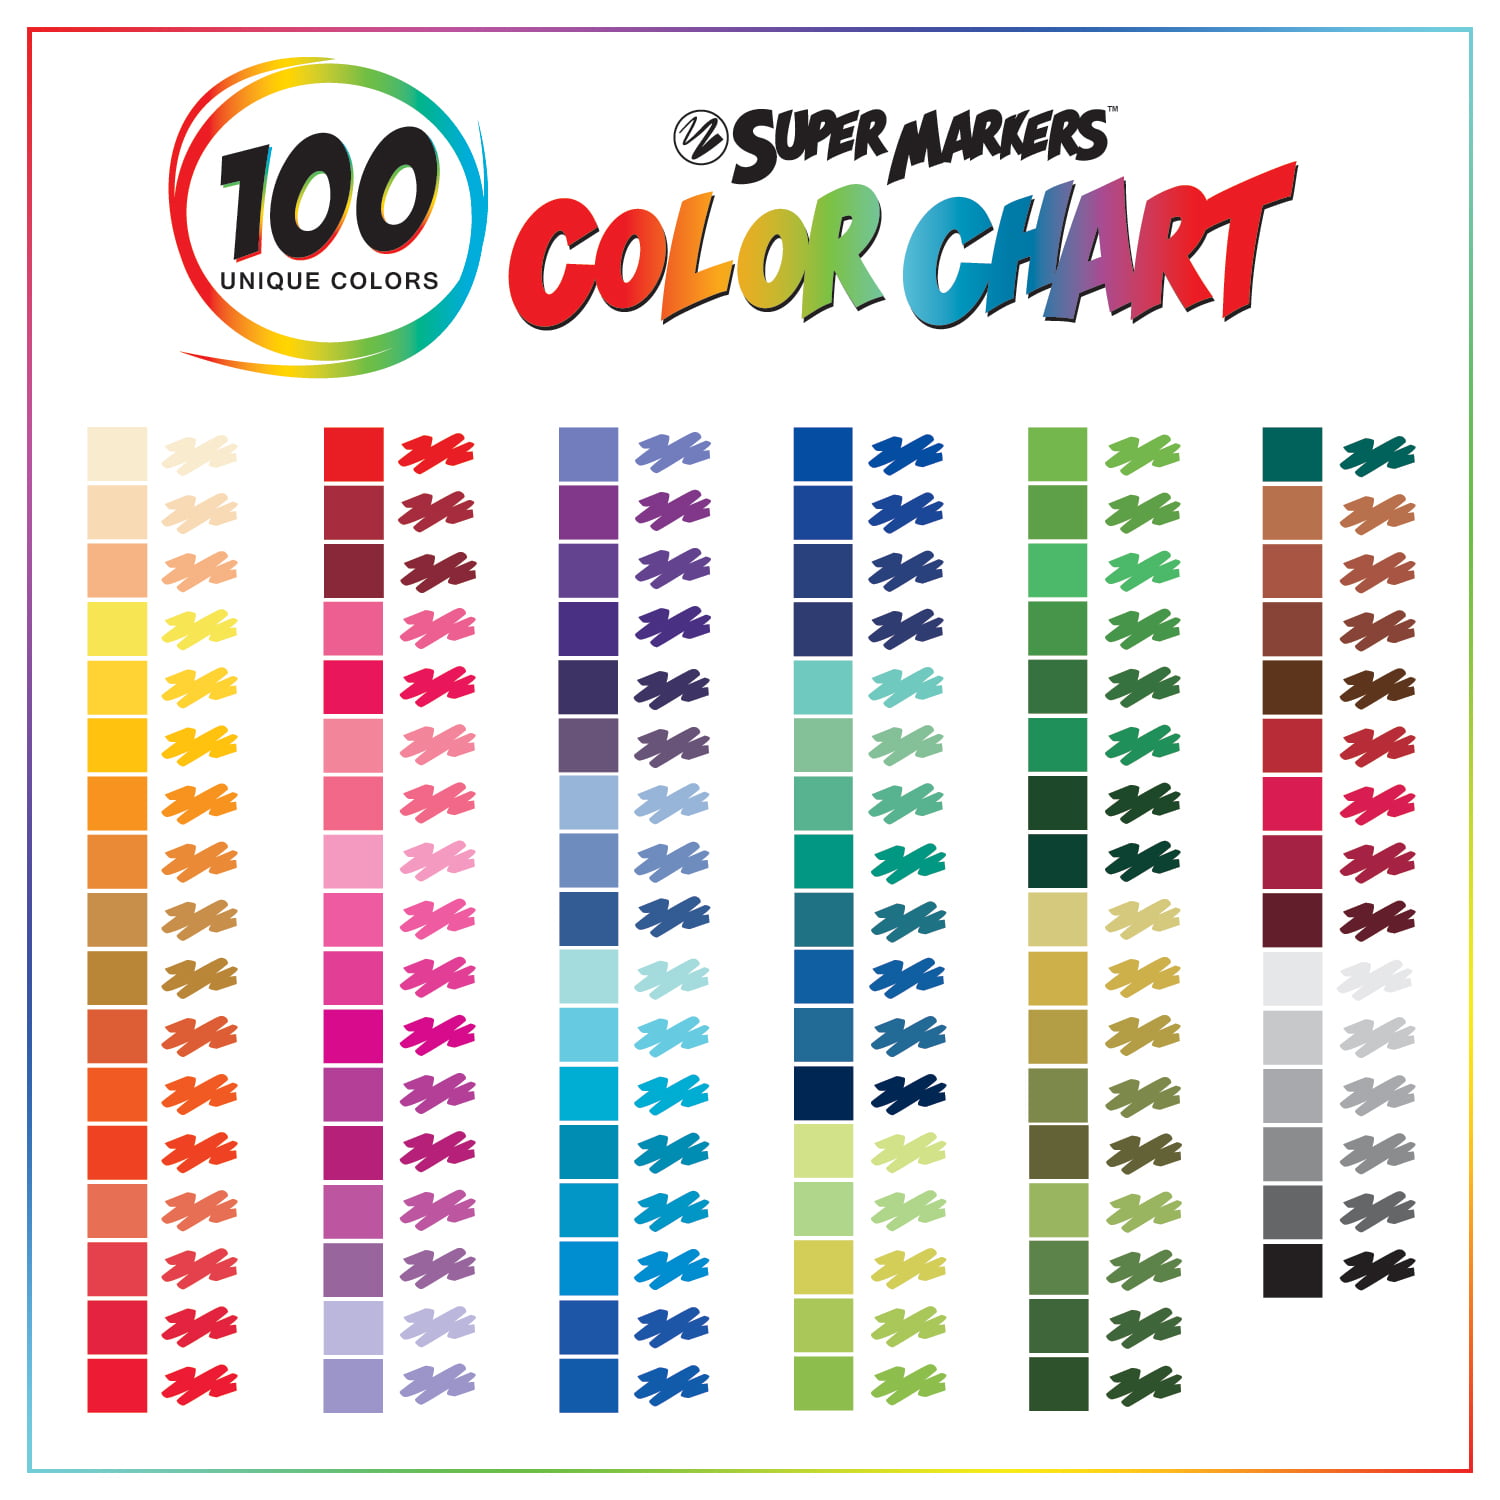 Crayola Super Tips 100